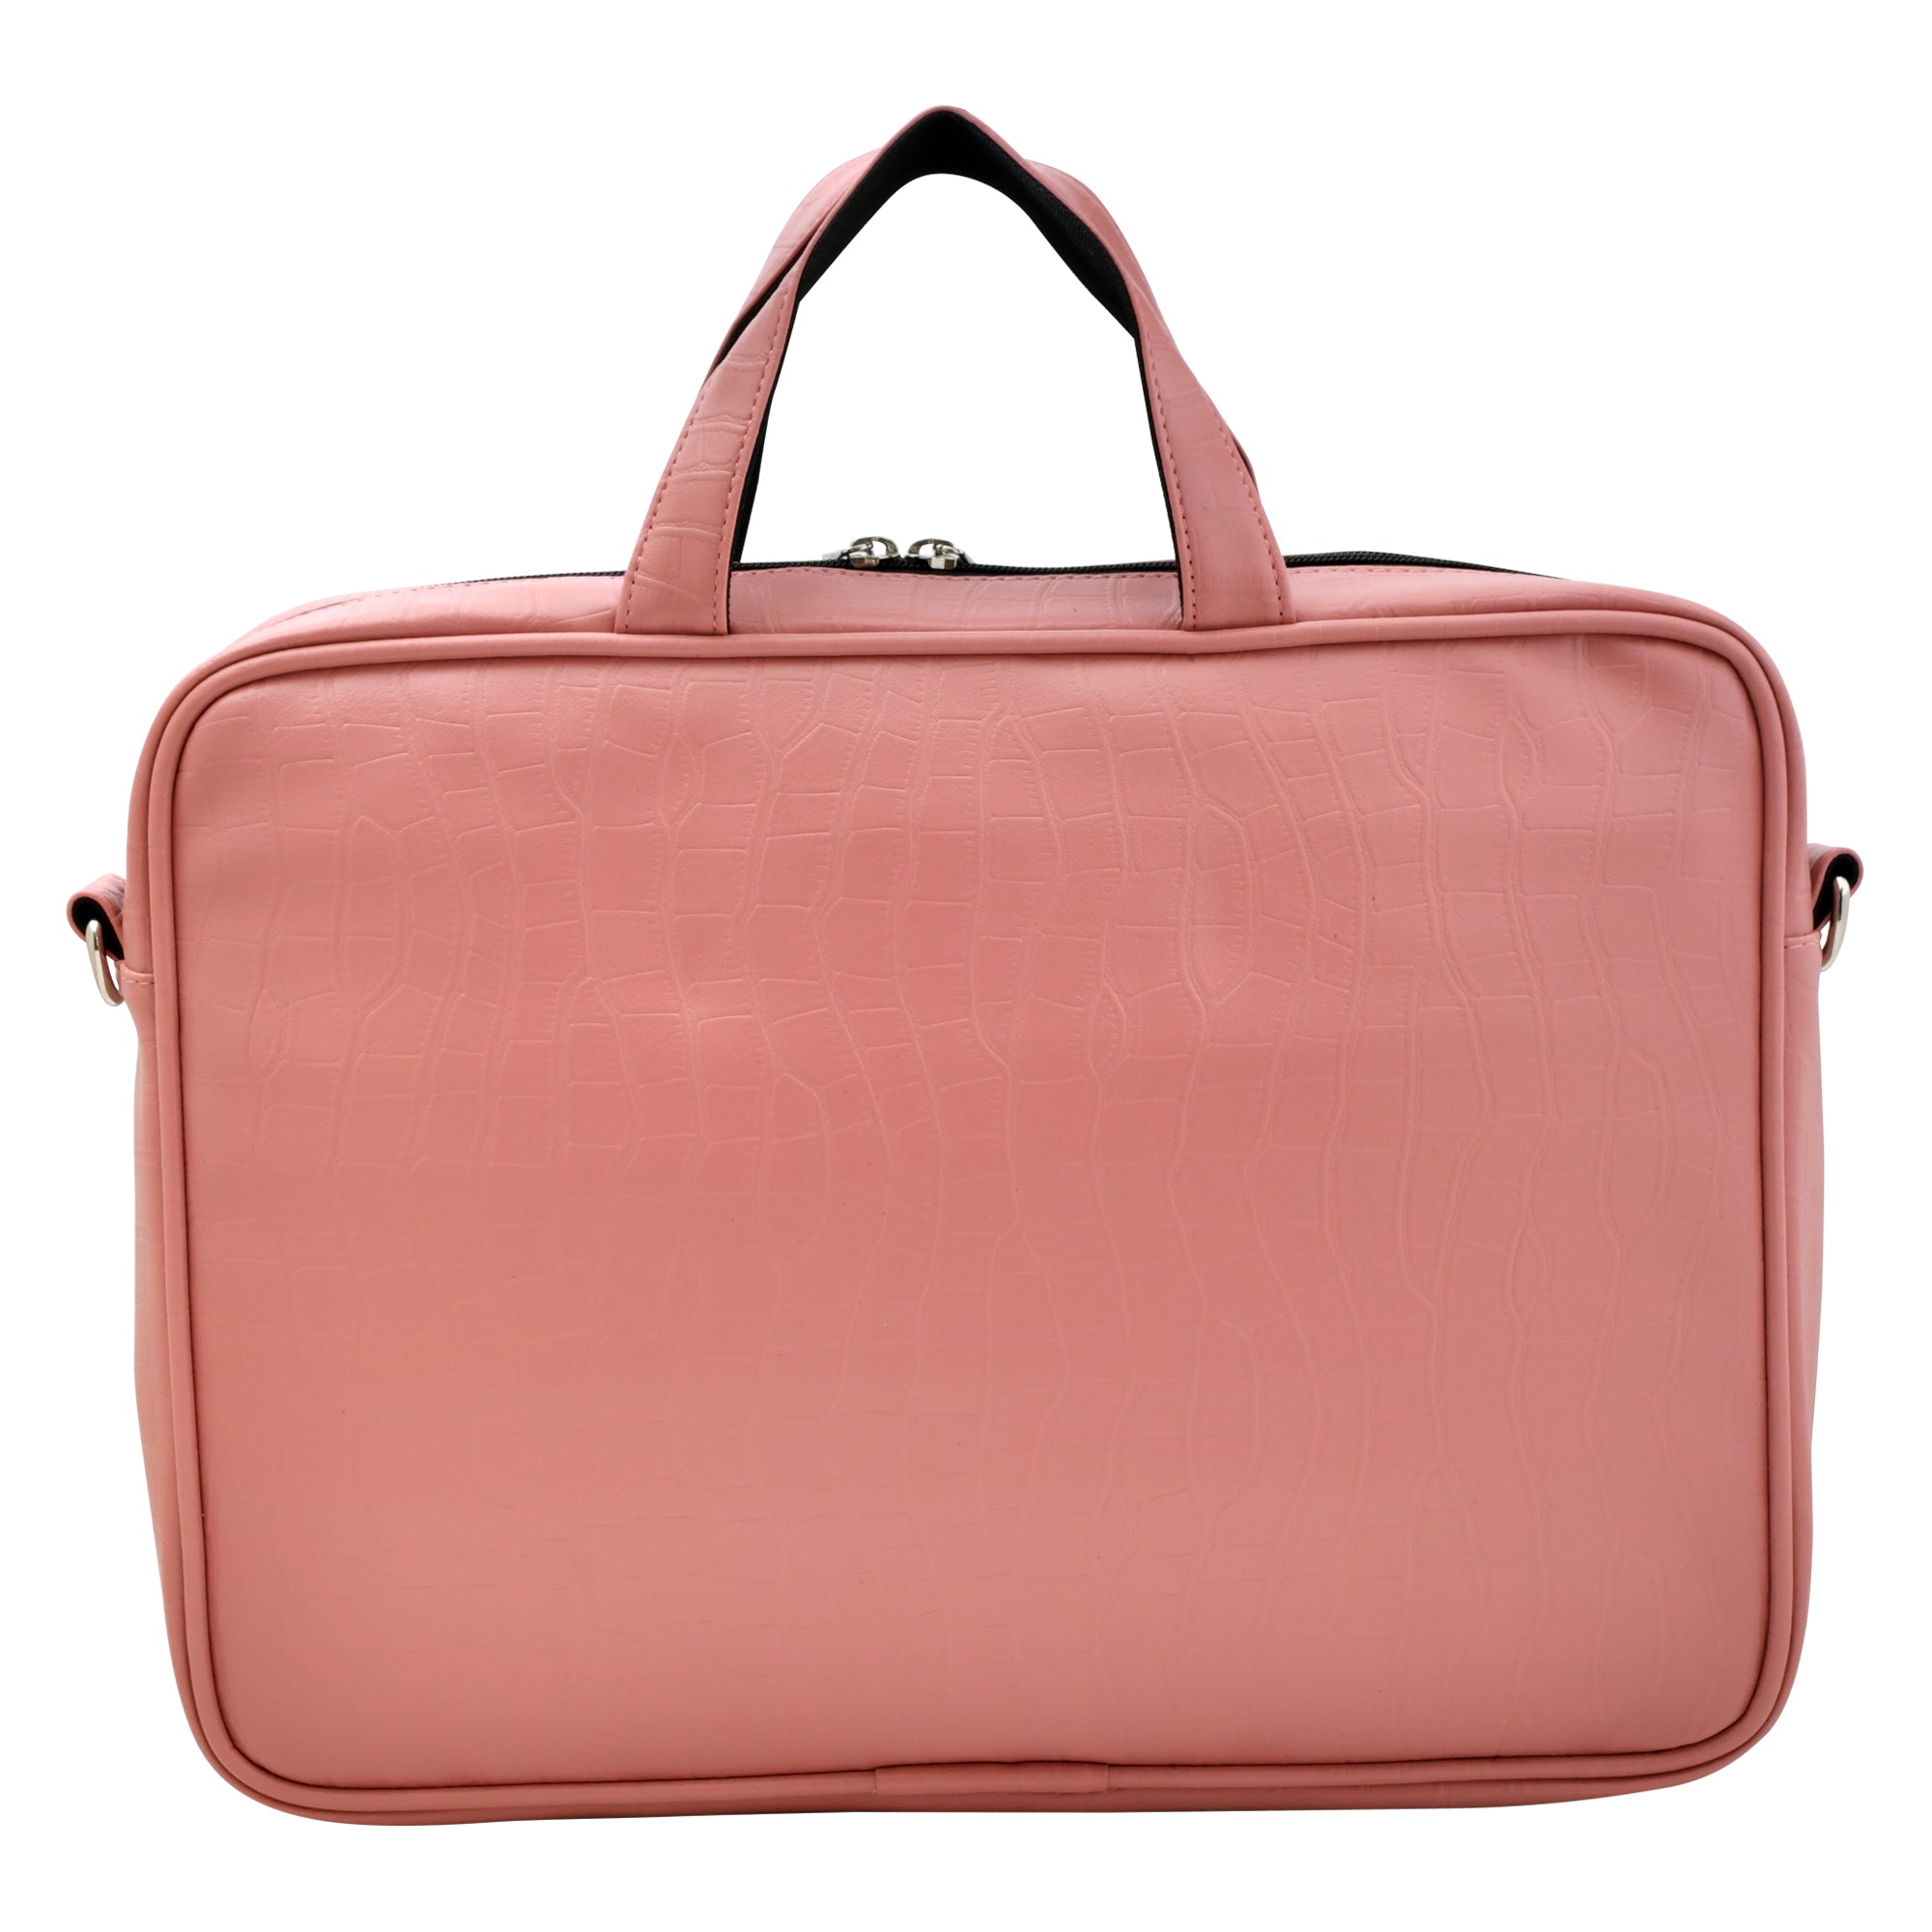 Women's leather laptop bags - Von Baer